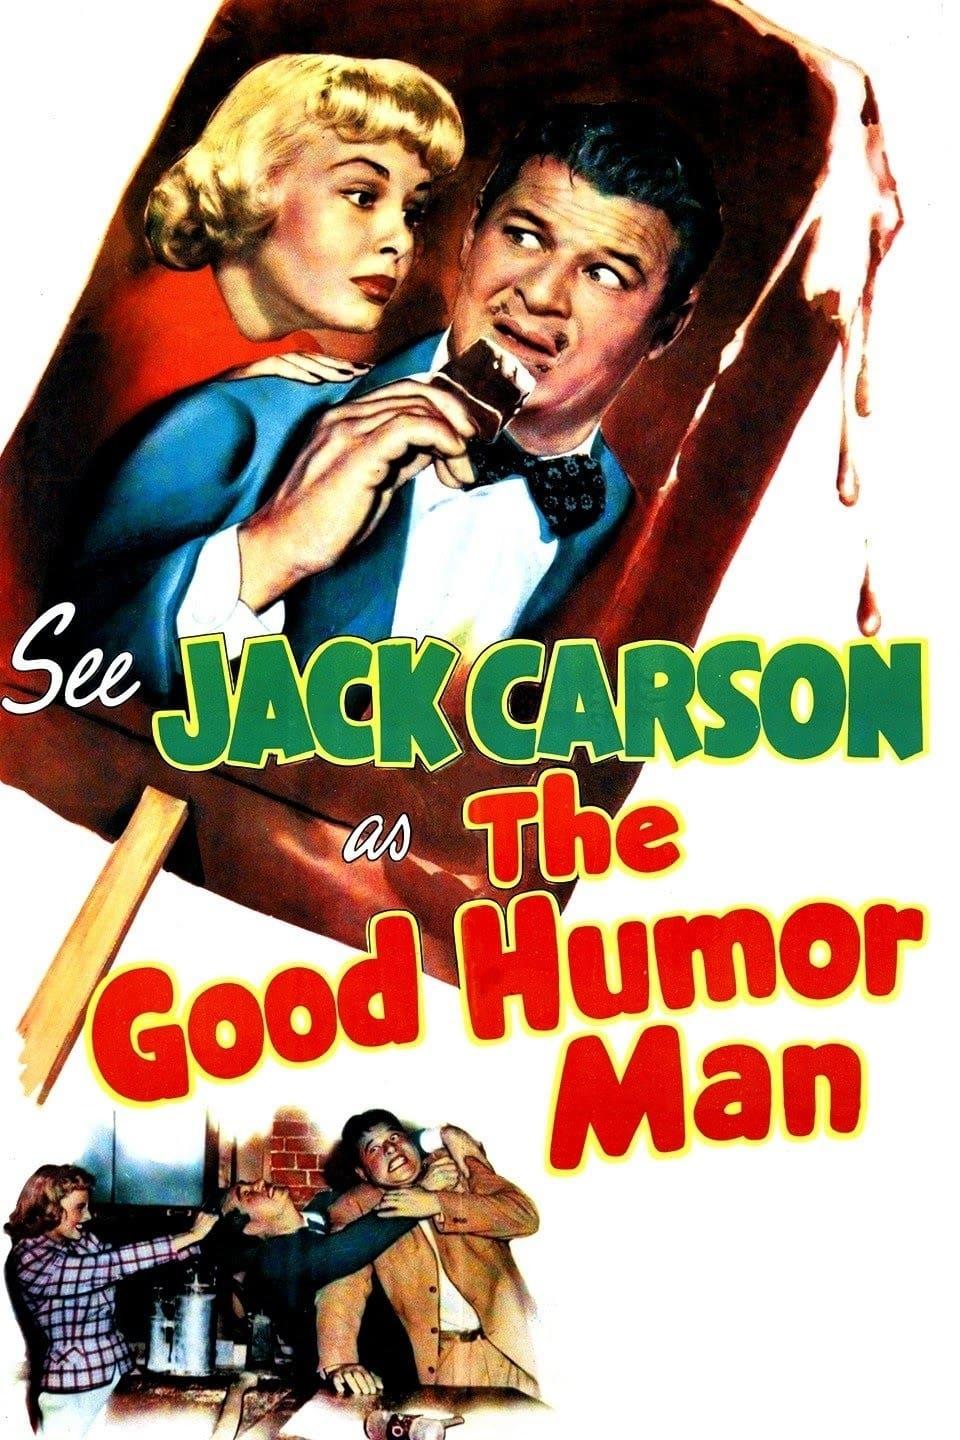 The Good Humor Man poster